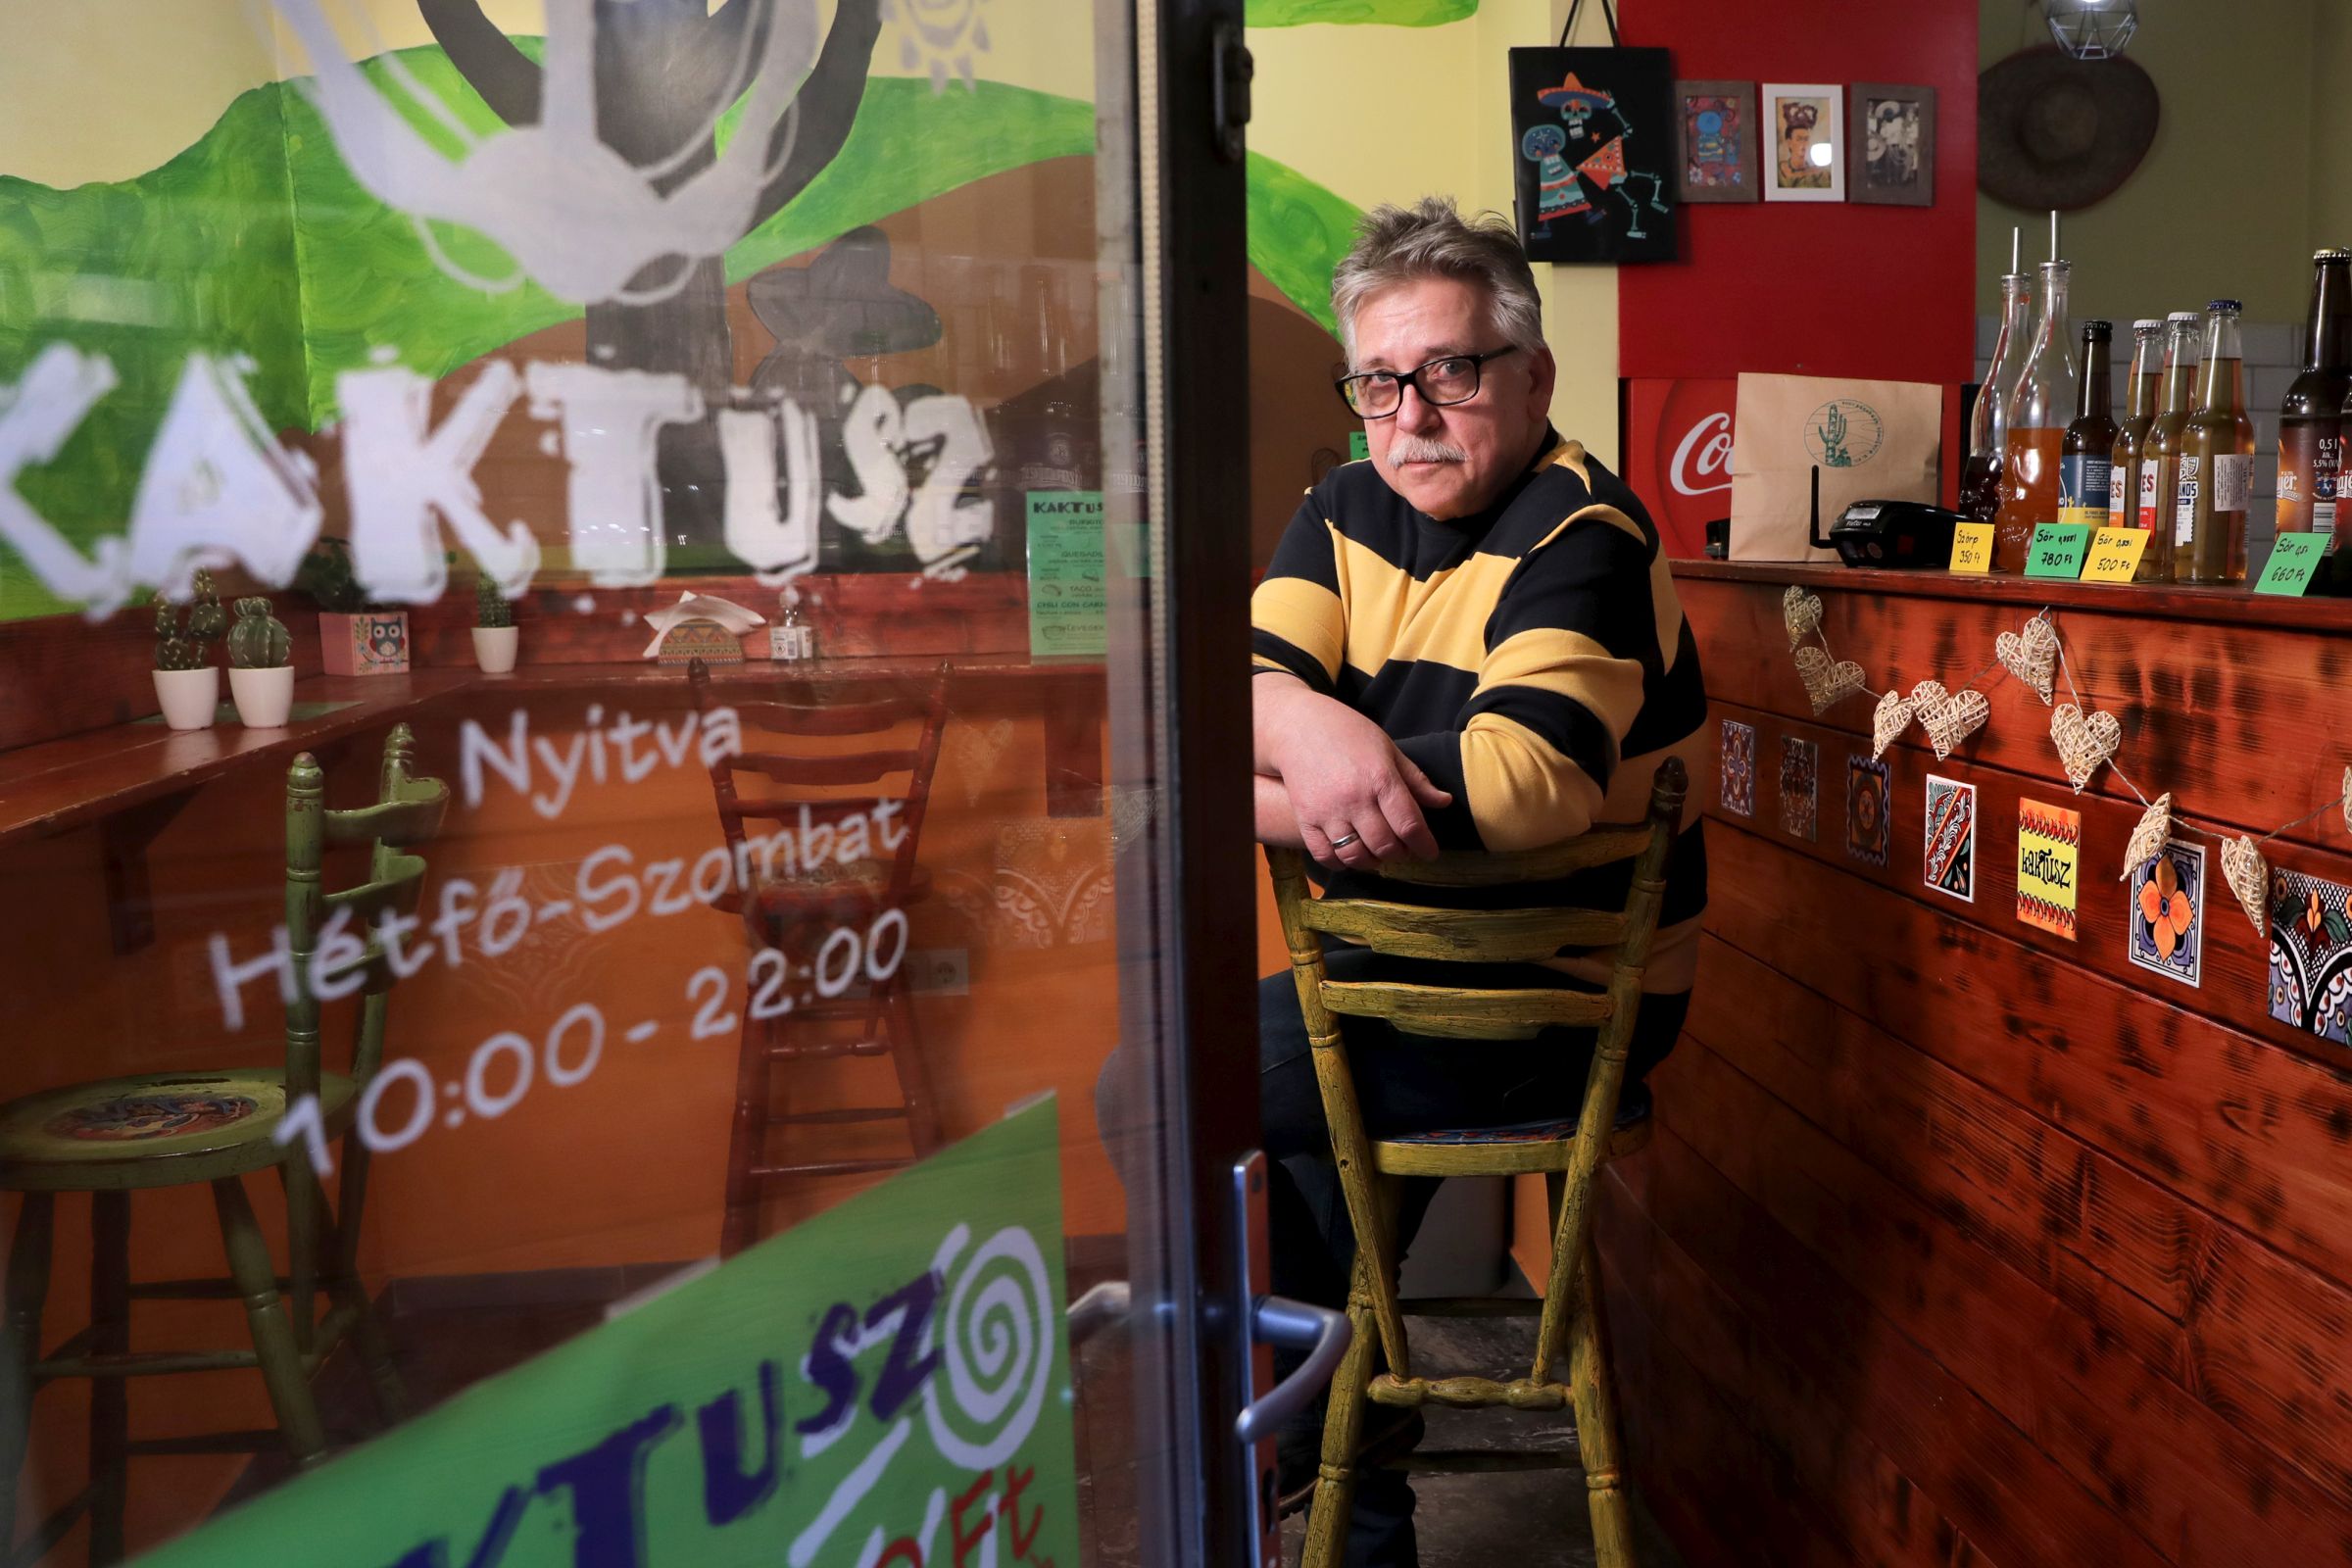 Kaktusz cooks up quality Tex-Mex in Budapest